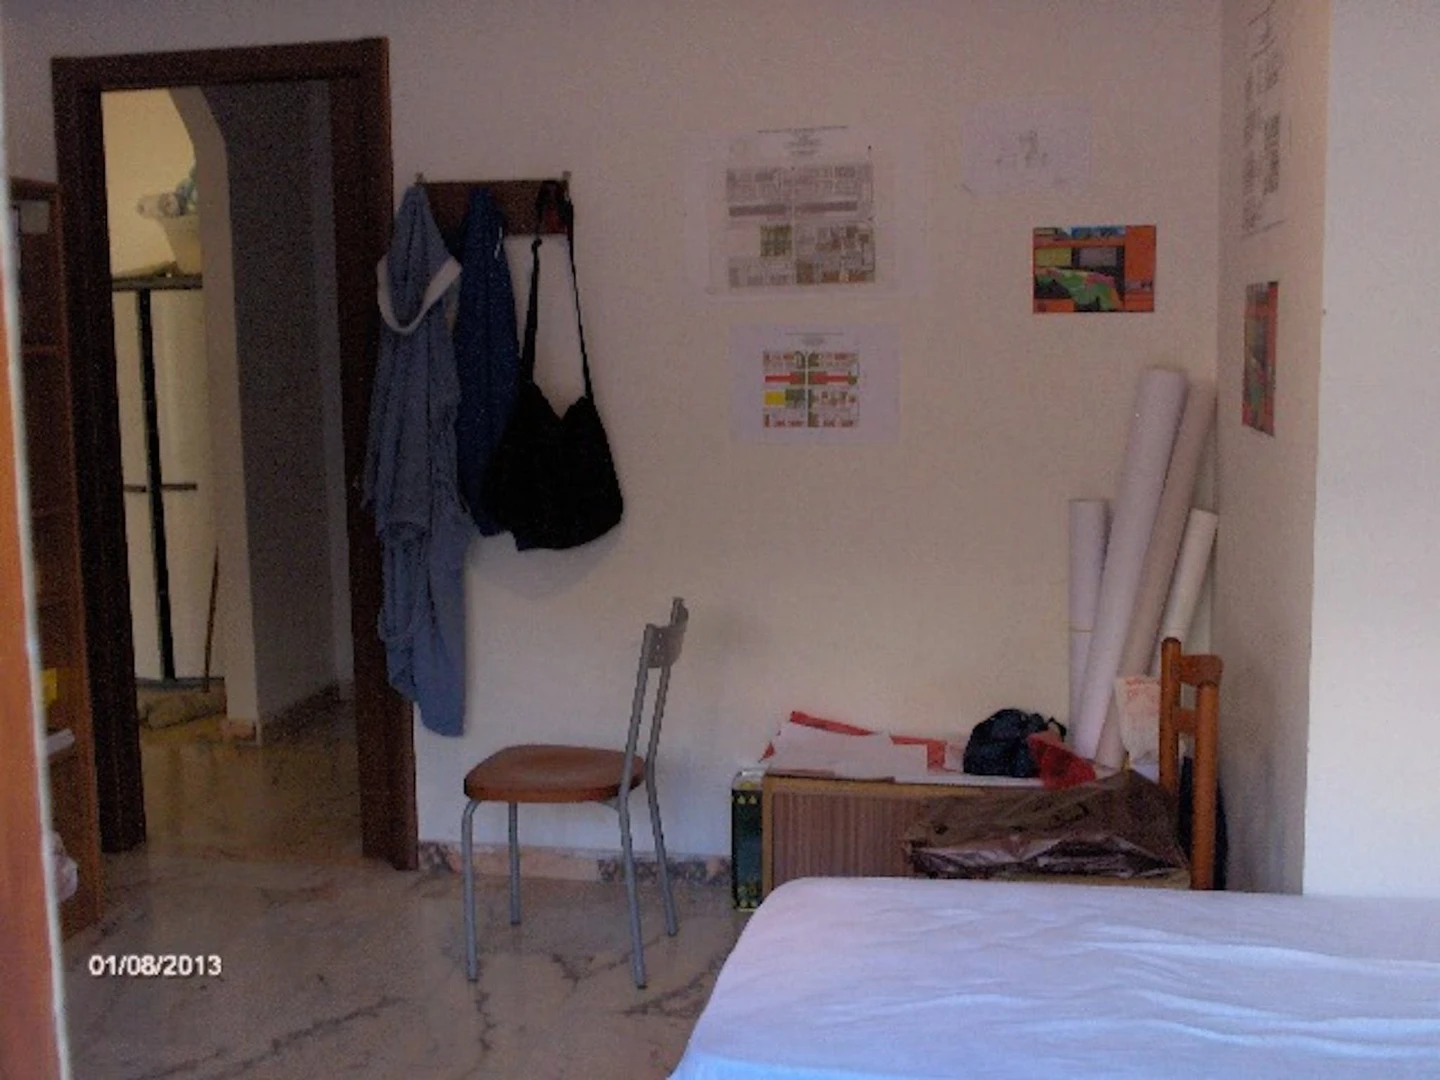 Reggio Calabria de kiralık ucuz paylaşımlı oda